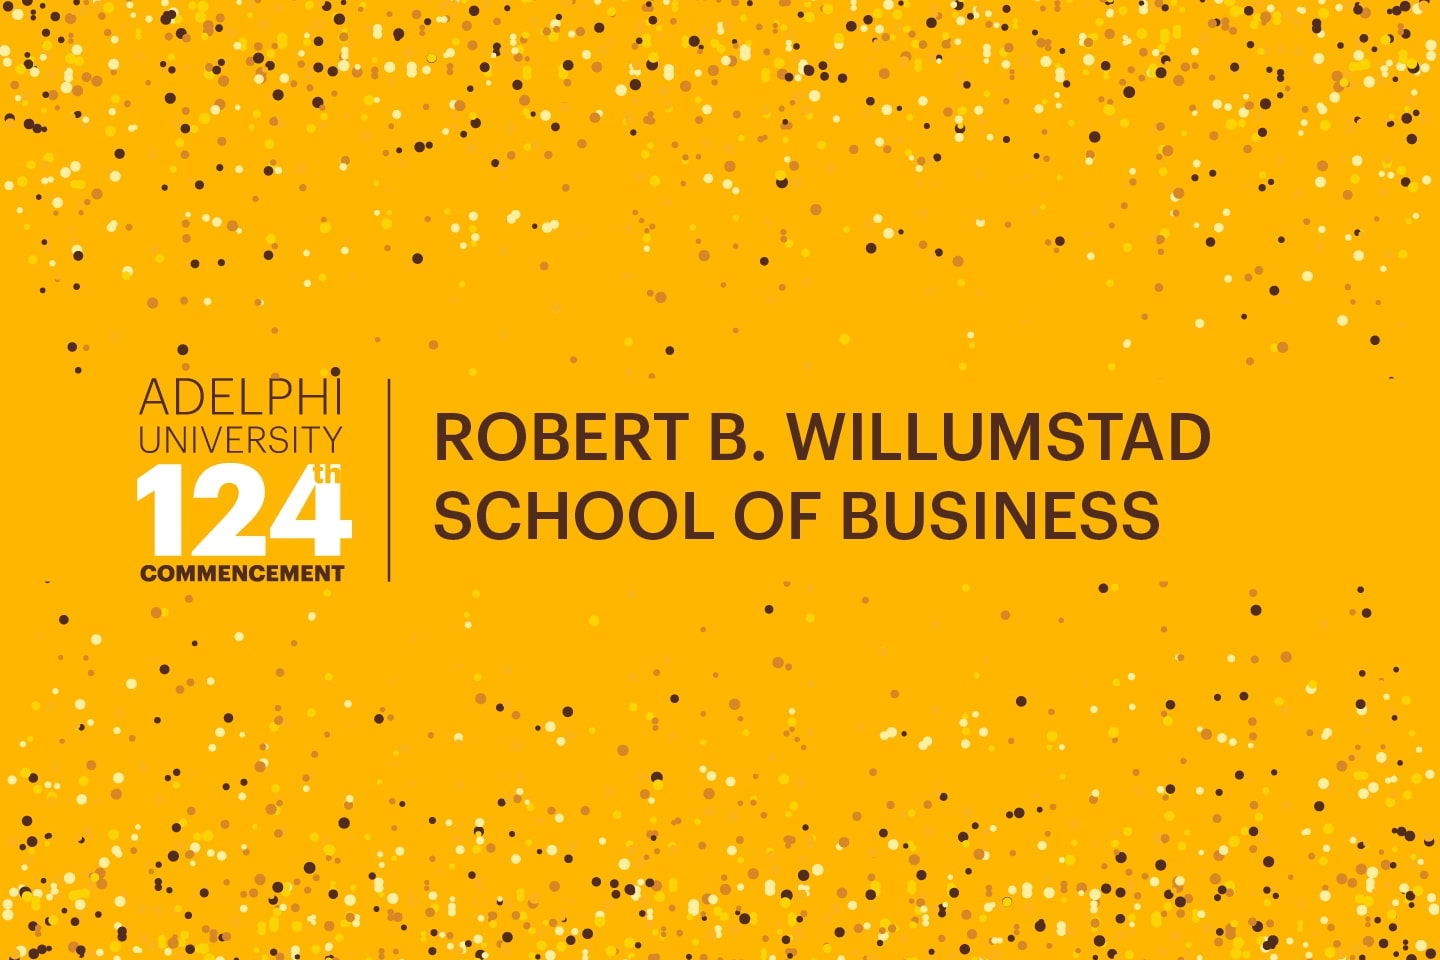 Adelphi University 124th Commencement: Robert B. Willumstad School of Business